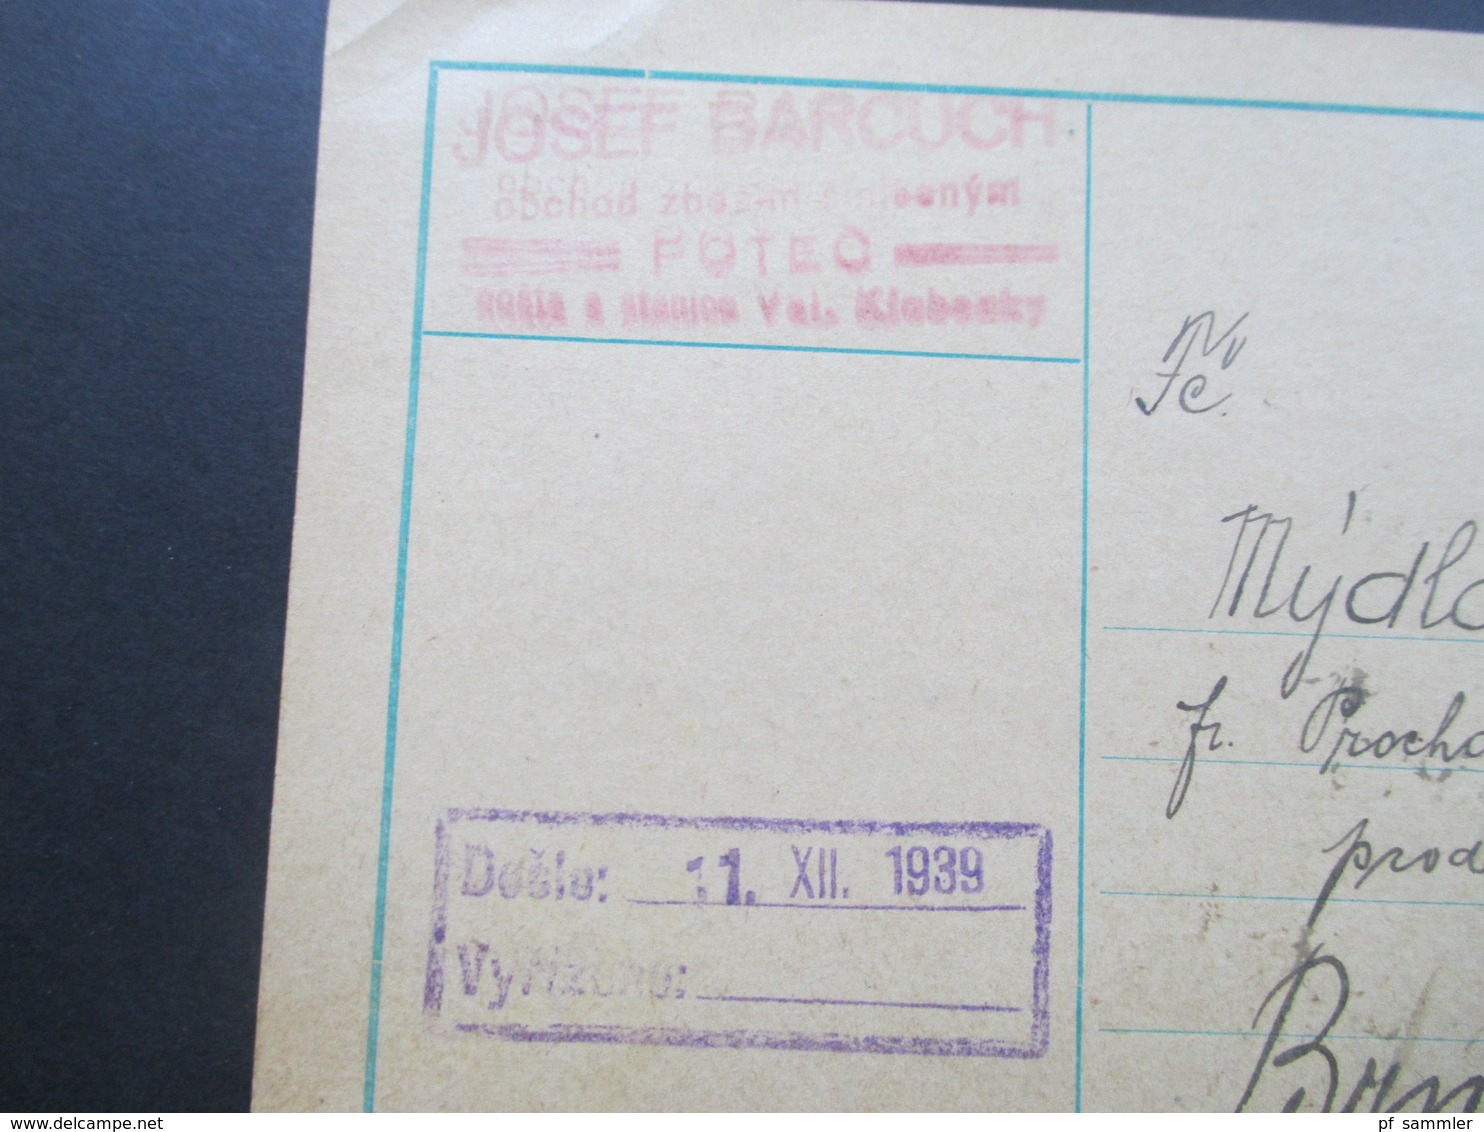 Böhmen Und Mähren 1939 Postkarte Firmenkarte Josef Barcuch Potec. Interessante Karte! - Storia Postale